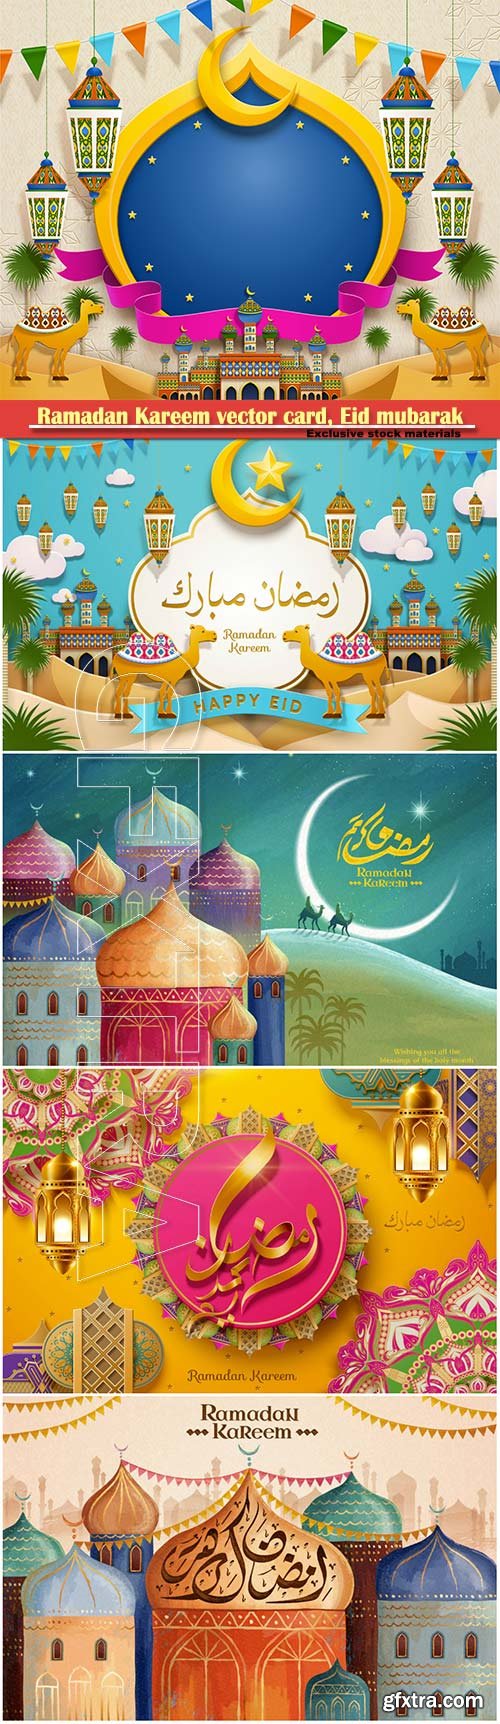 Ramadan Kareem vector card, Eid mubarak calligraphy design templates # 12